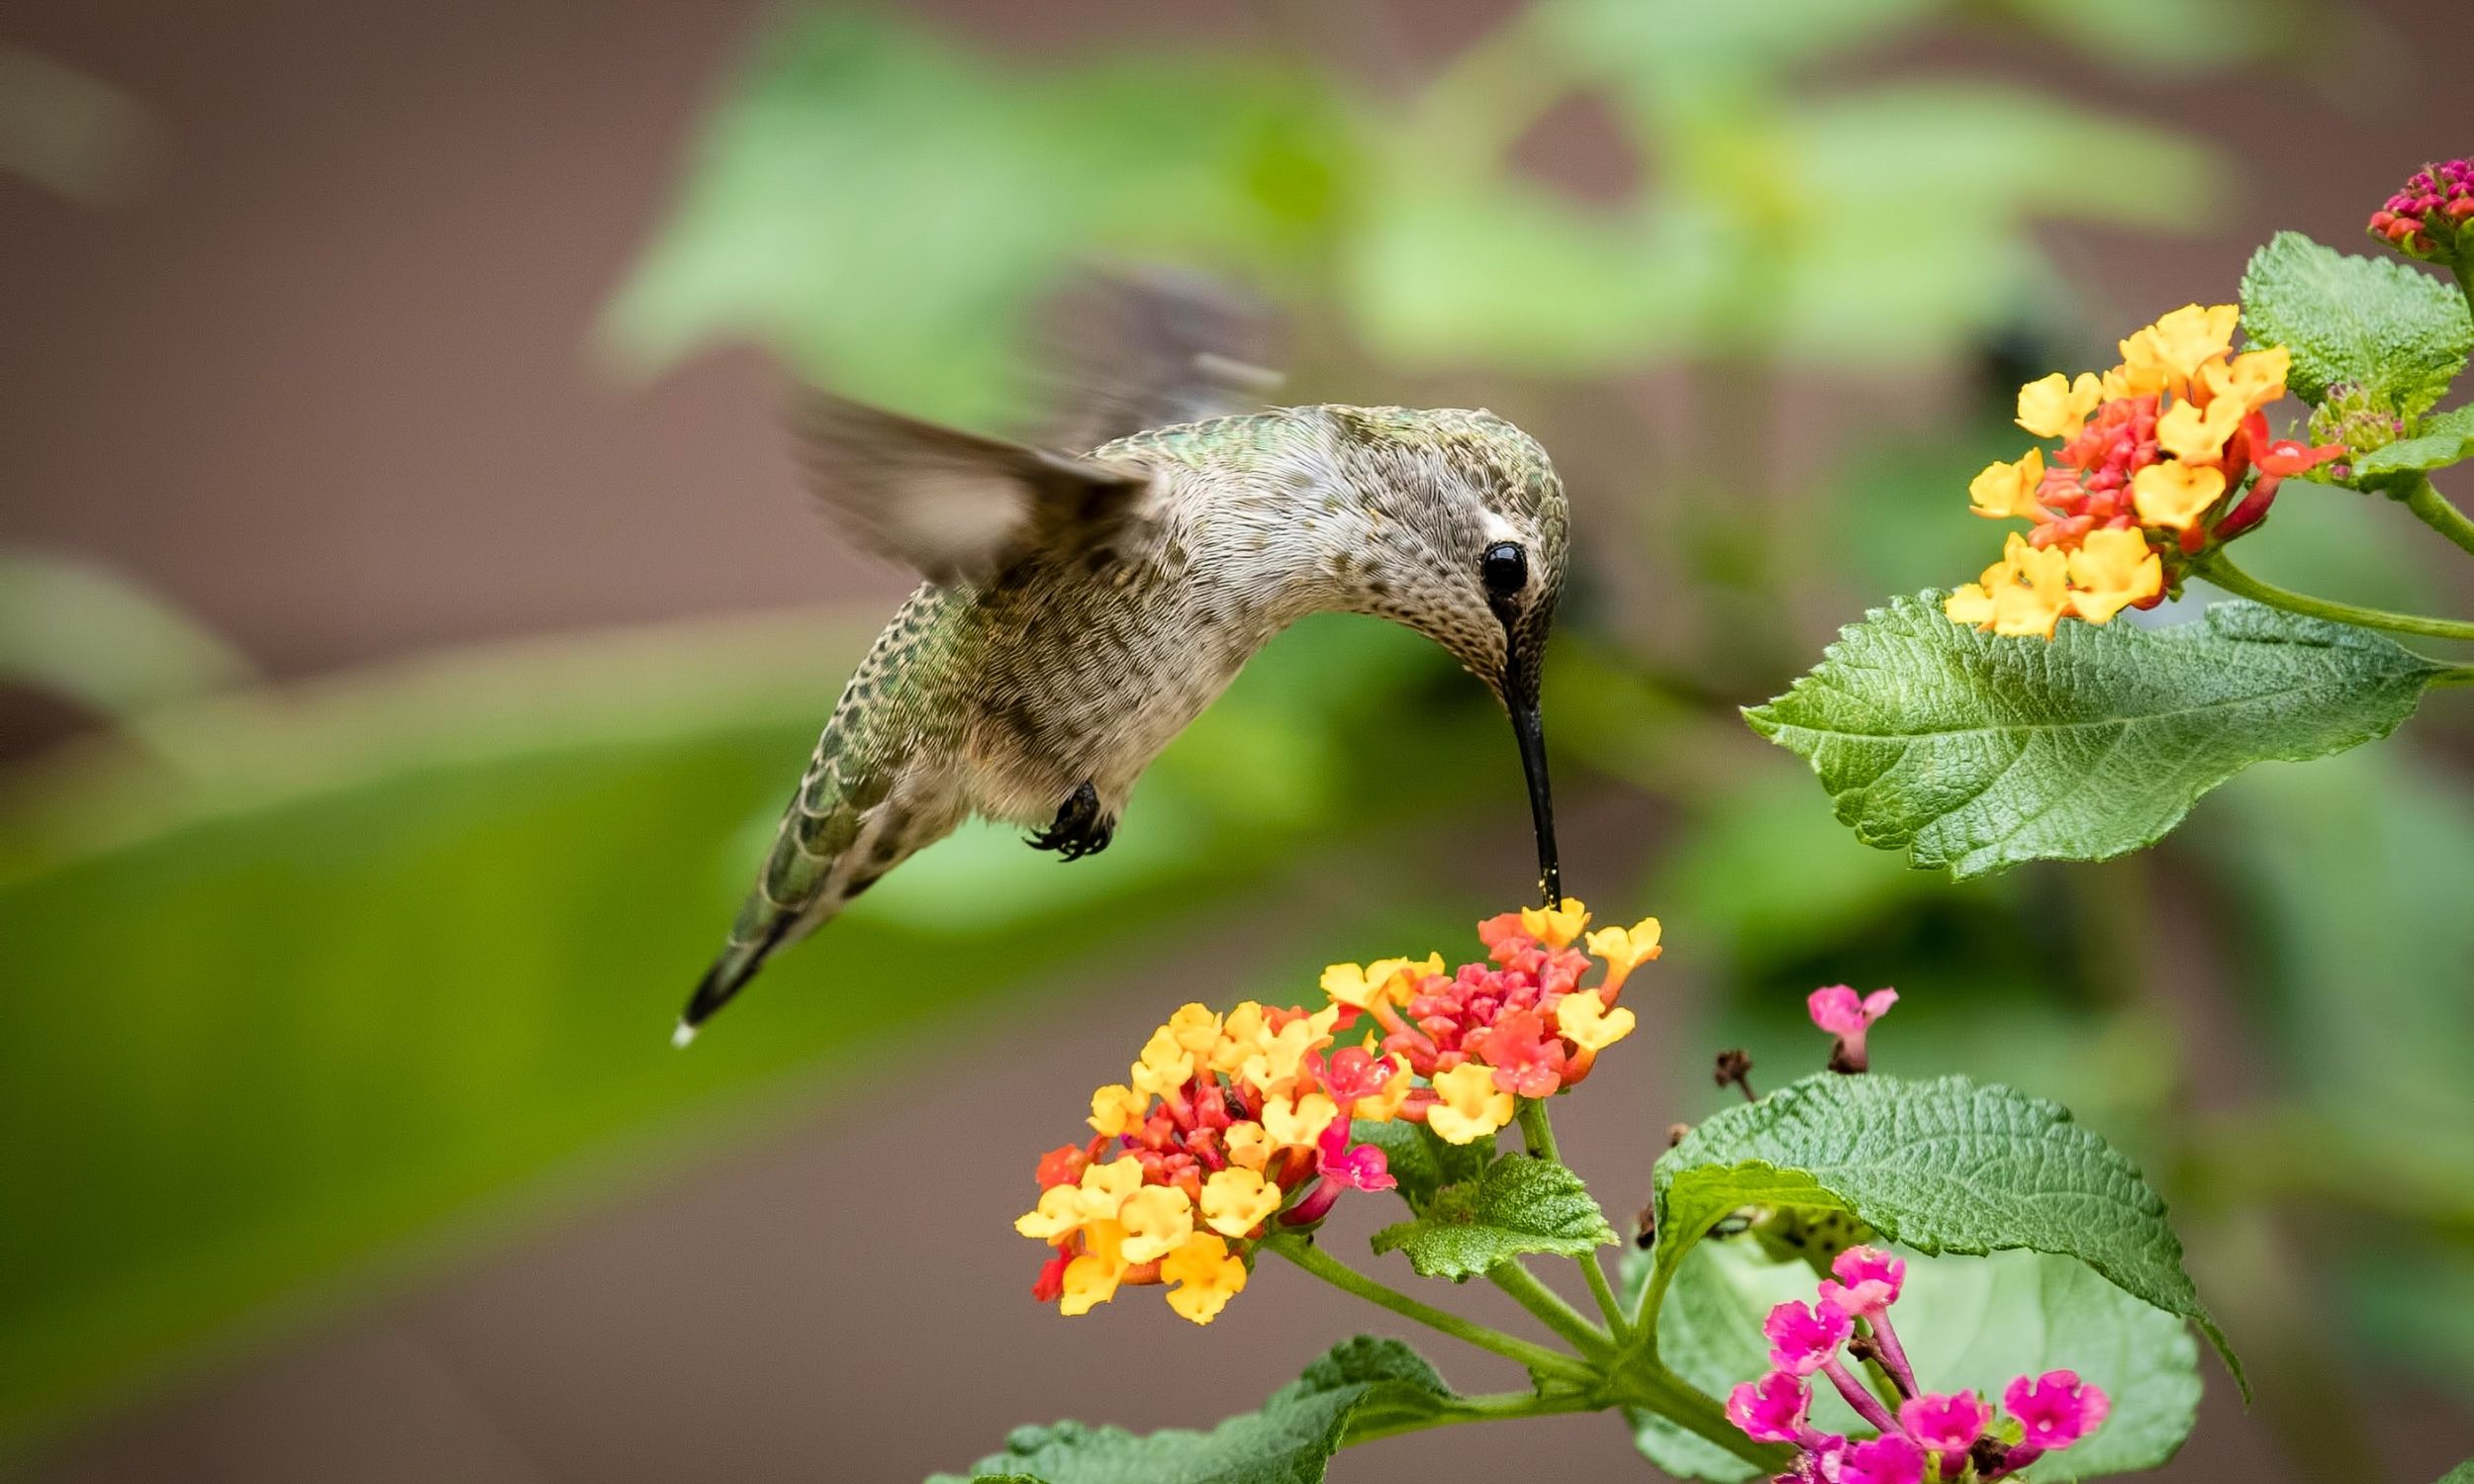 hummingbird drinking from a flower